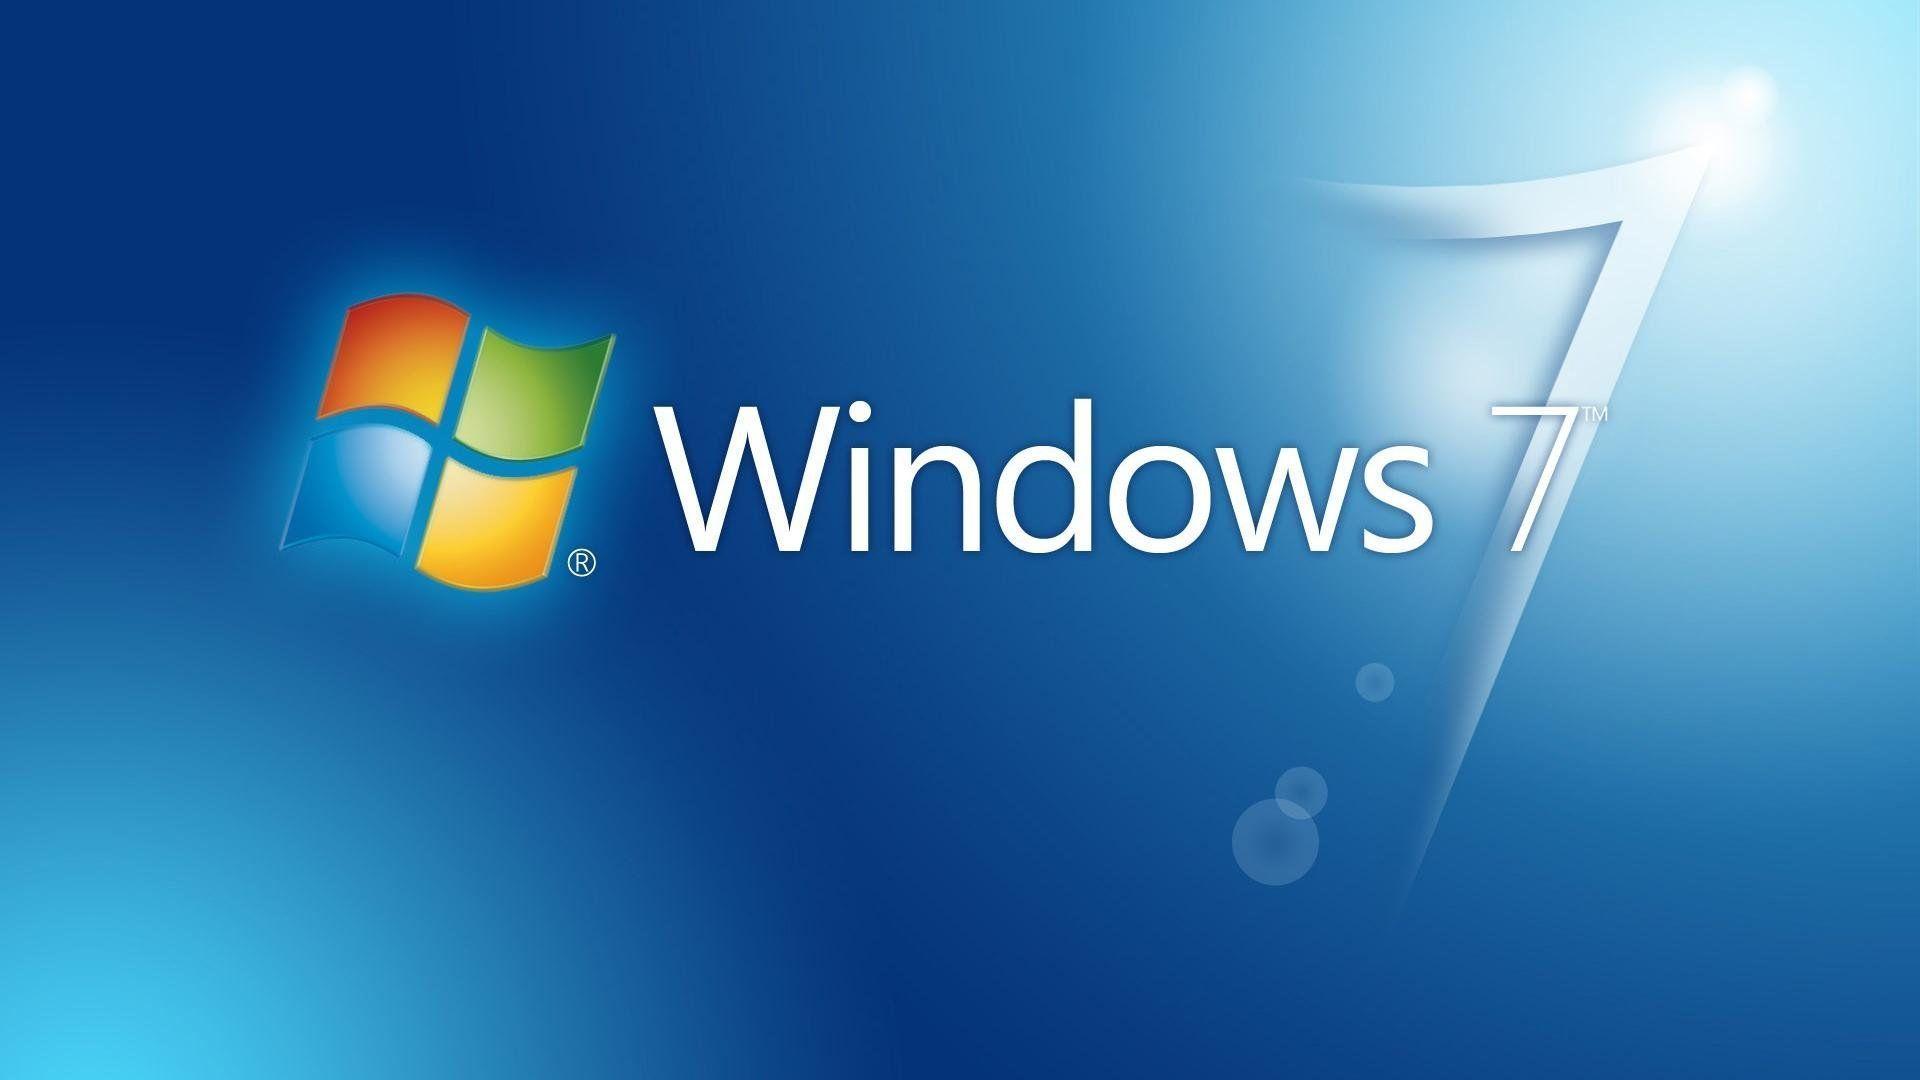 Windows 7 Hd Wallpapers Top Free Windows 7 Hd Backgrounds Wallpaperaccess